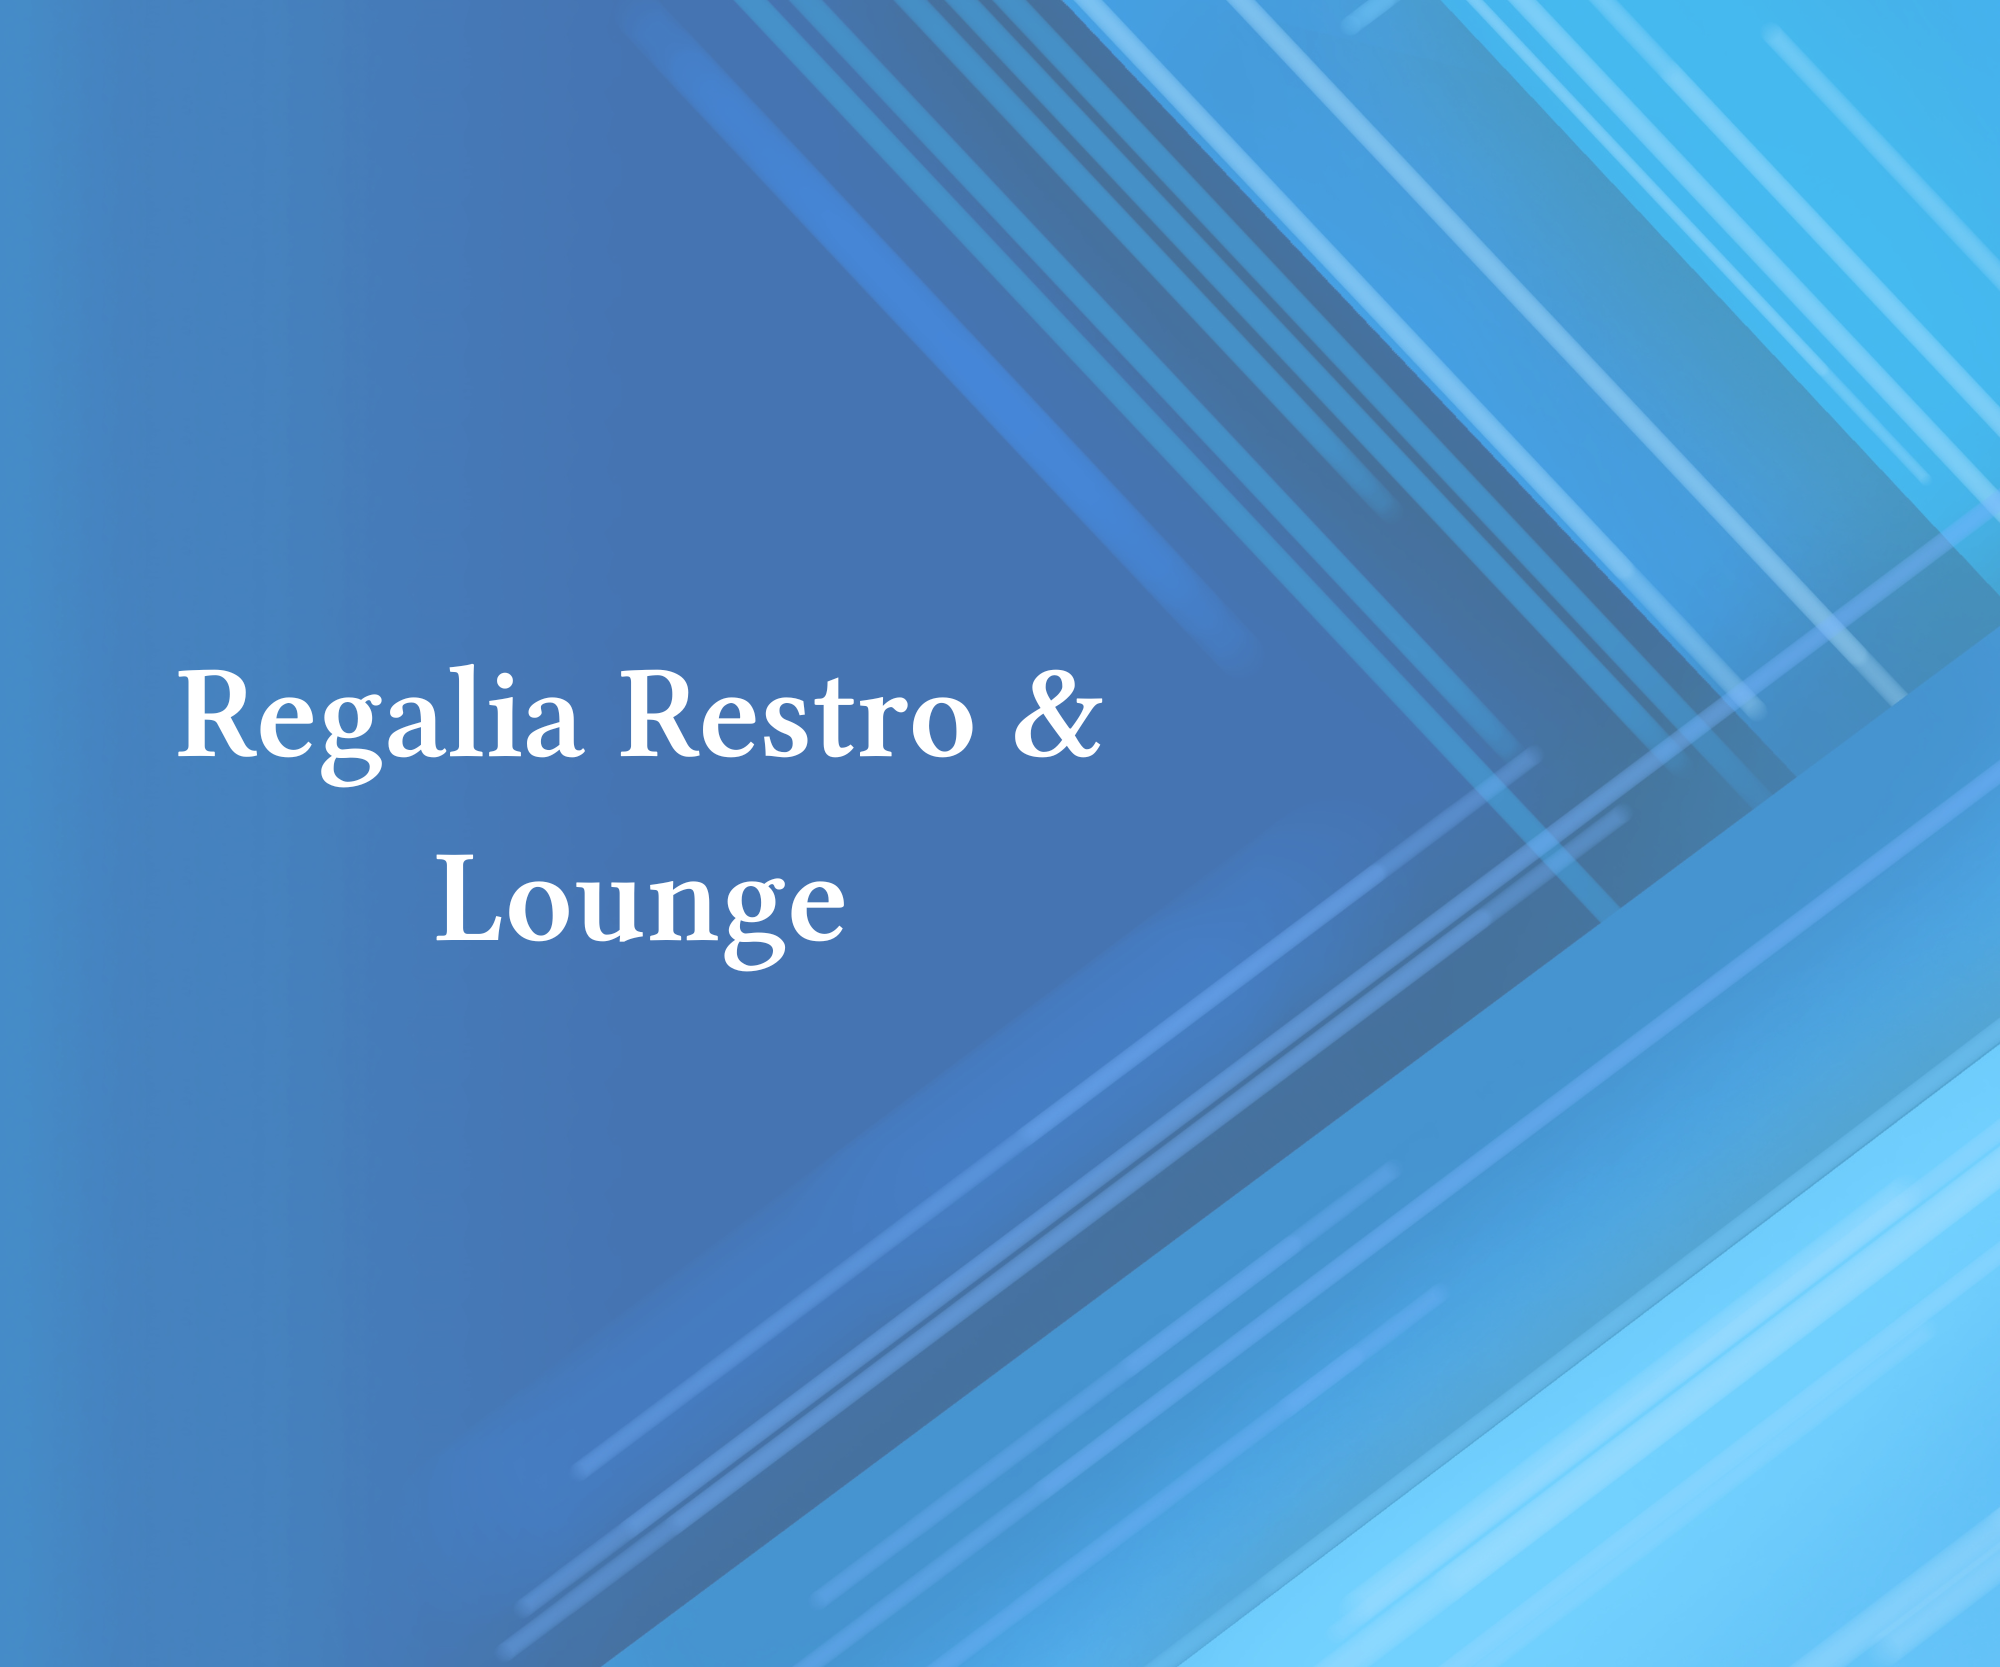 Regalia Restro & Lounge  